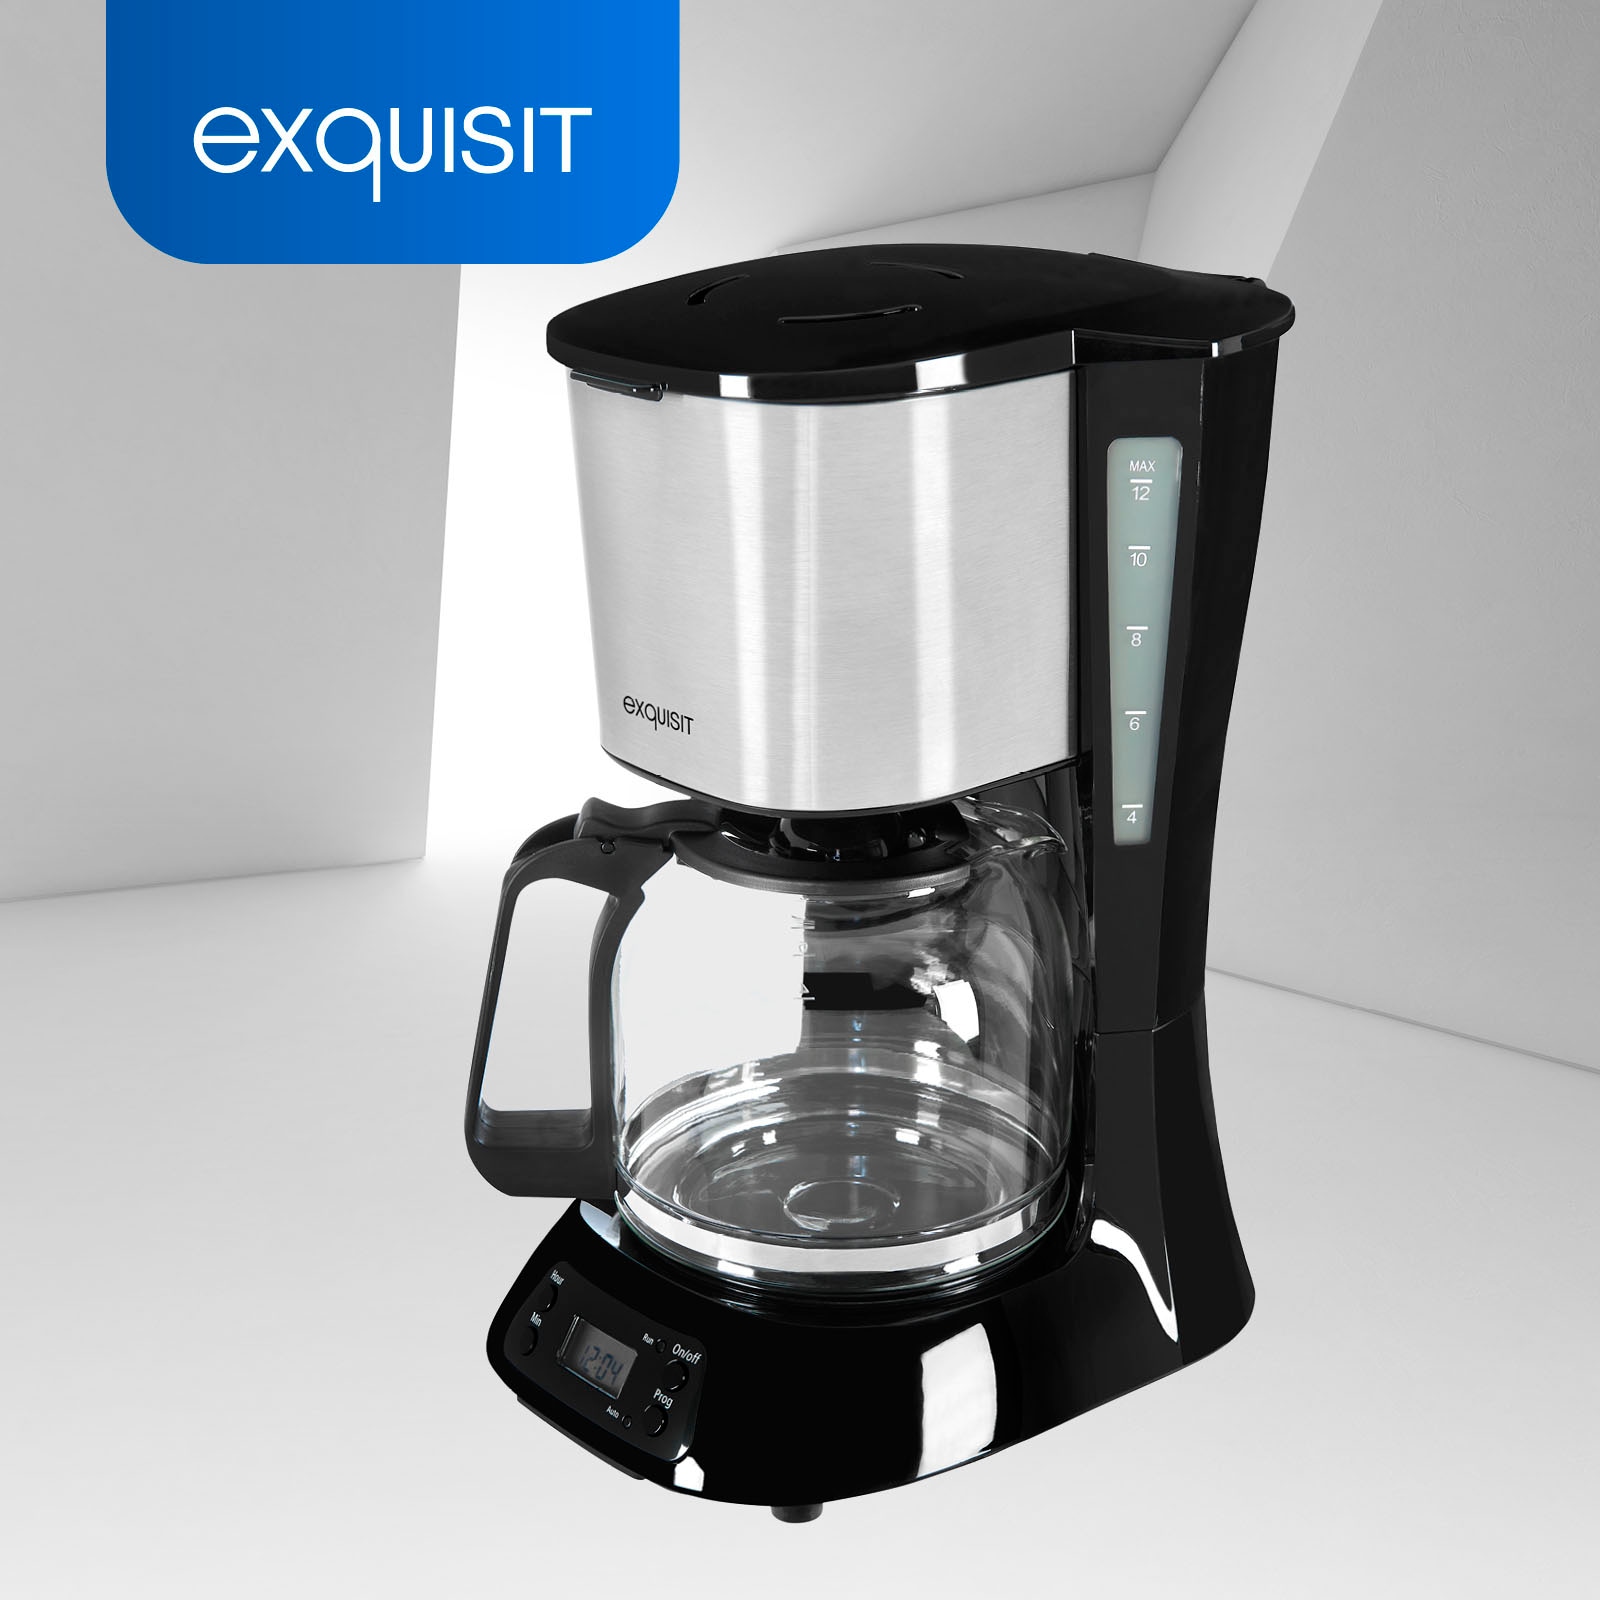 exquisit Filterkaffeemaschine »KA 6119 isw«, 1,5 l Kaffeekanne, Papierfilter,  1x4 jetzt im OTTO Online Shop